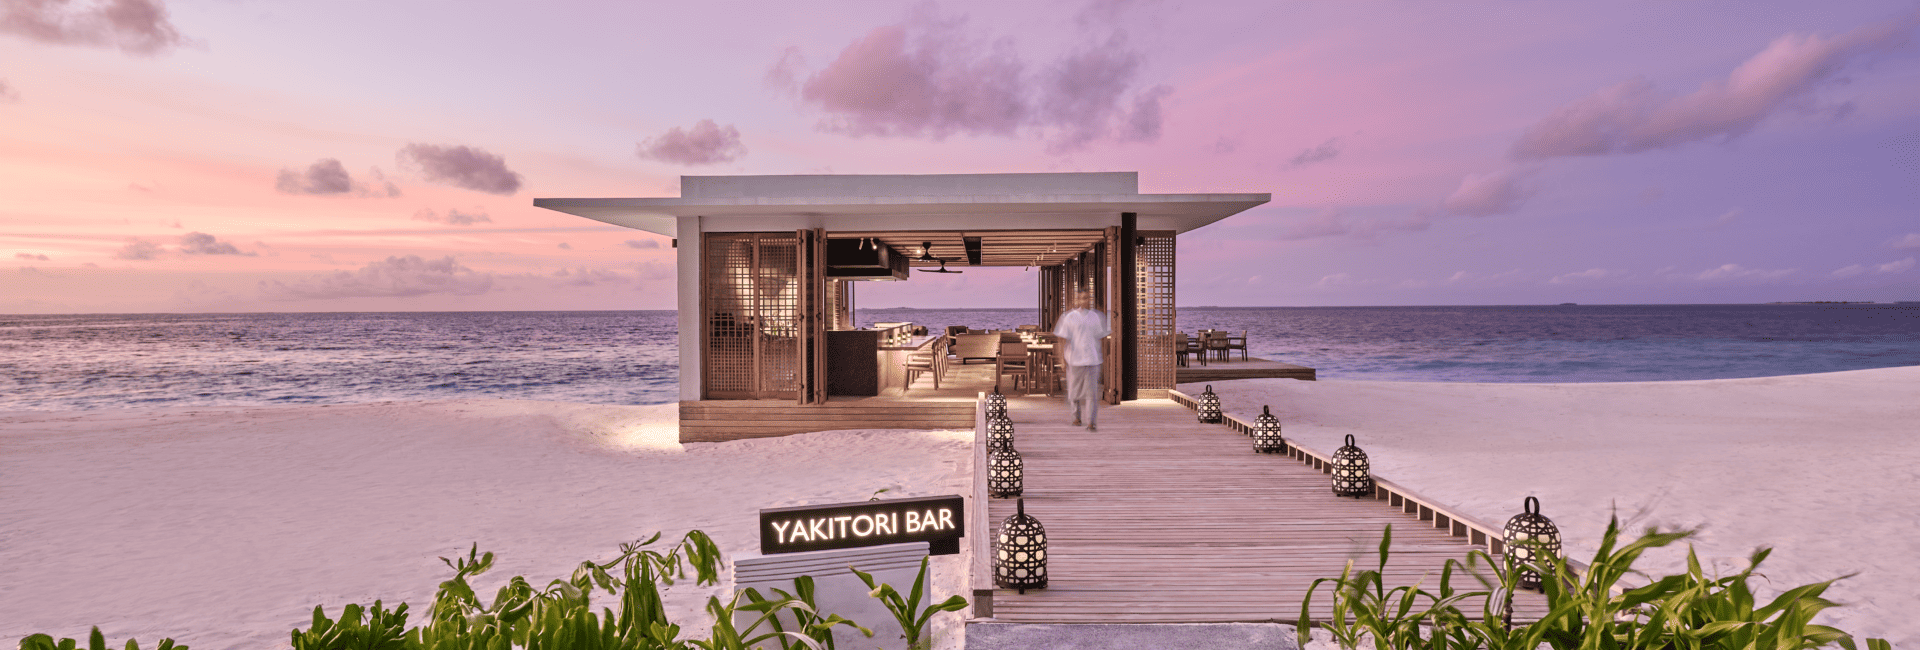 Alila Kothaifaru Maldives - Yakitori Bar Entrance